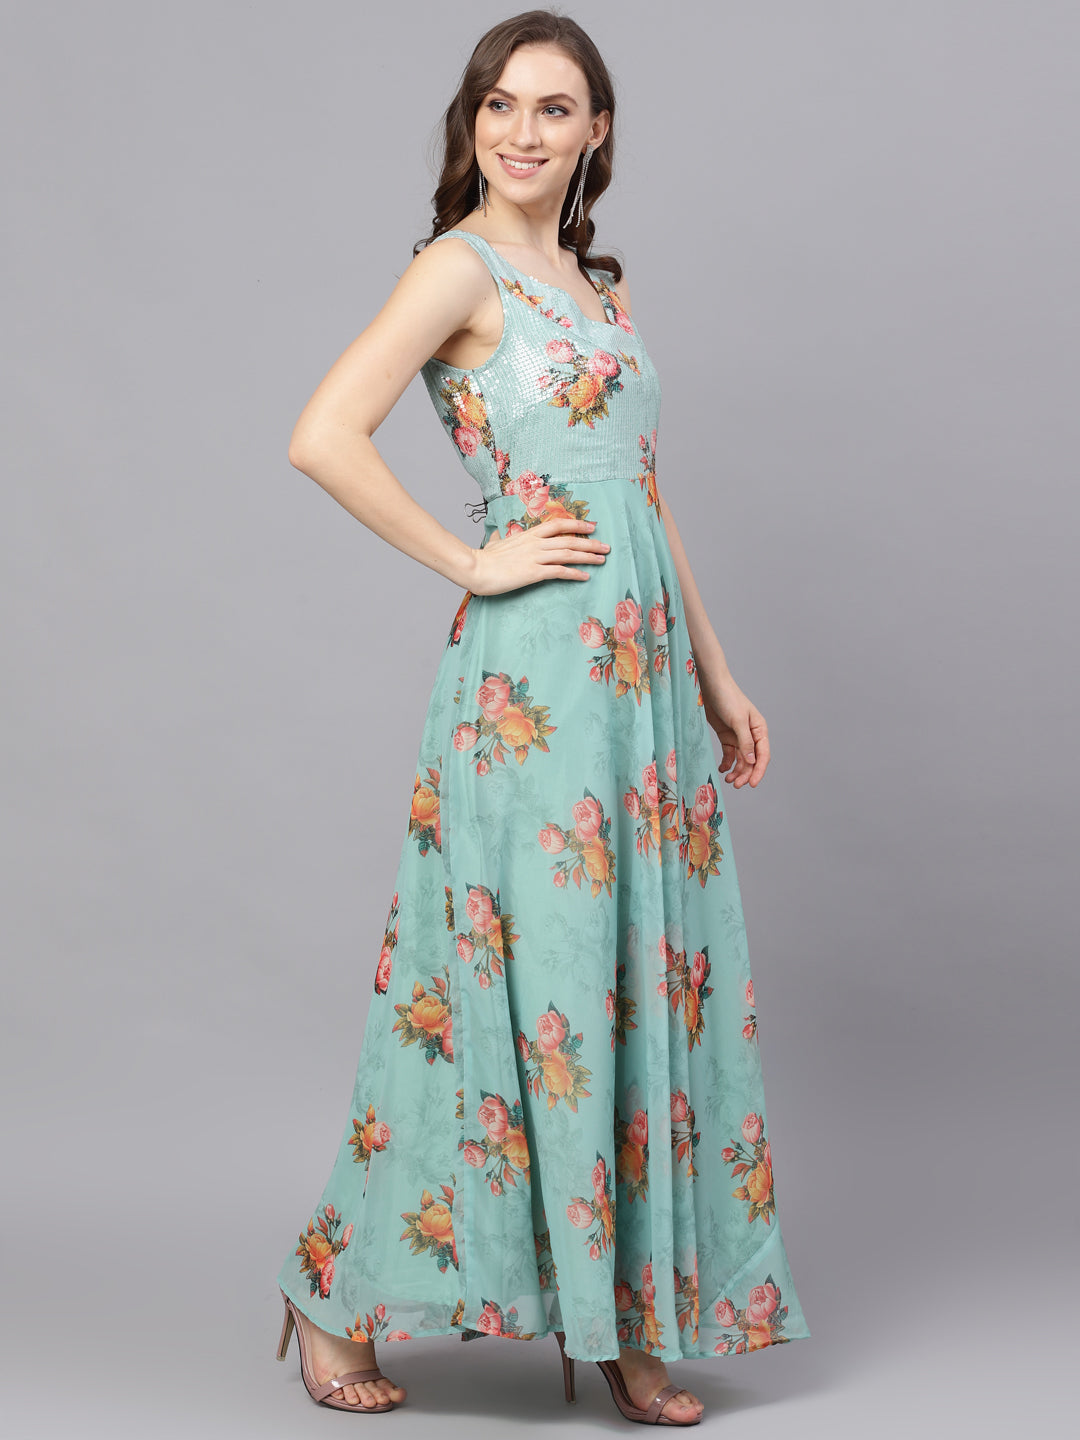 Green Floral Print V-Neck Gown Dress